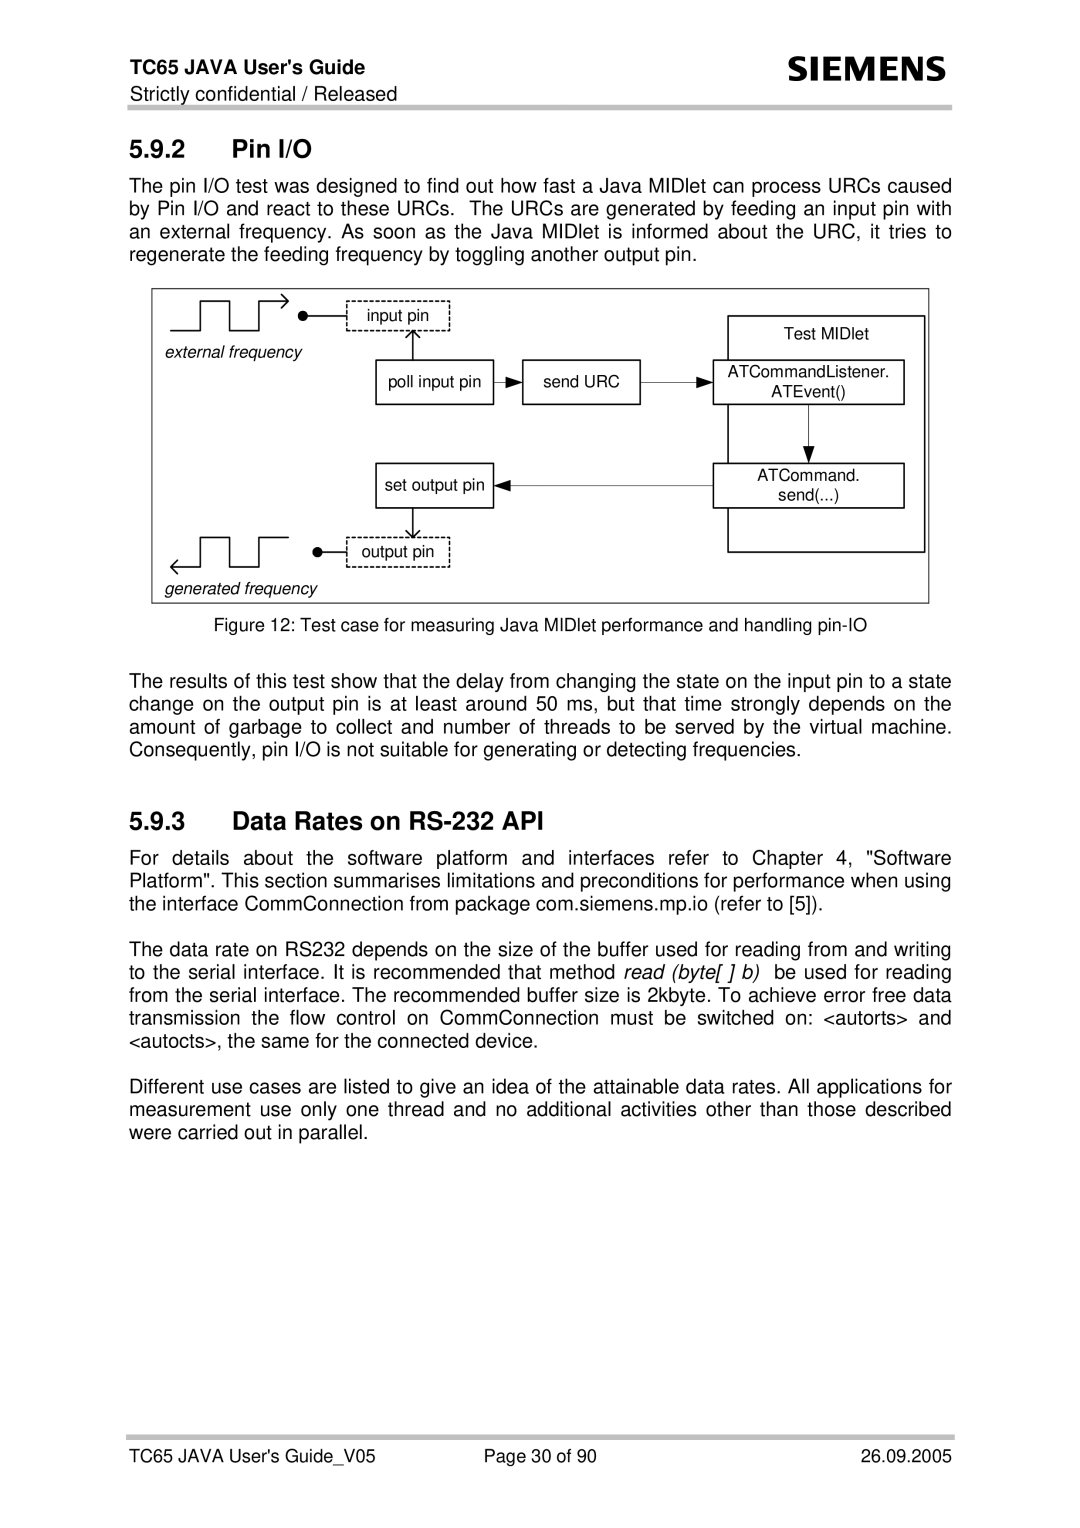 Siemens TC65 manual Pin I/O, Data Rates on RS-232 API 